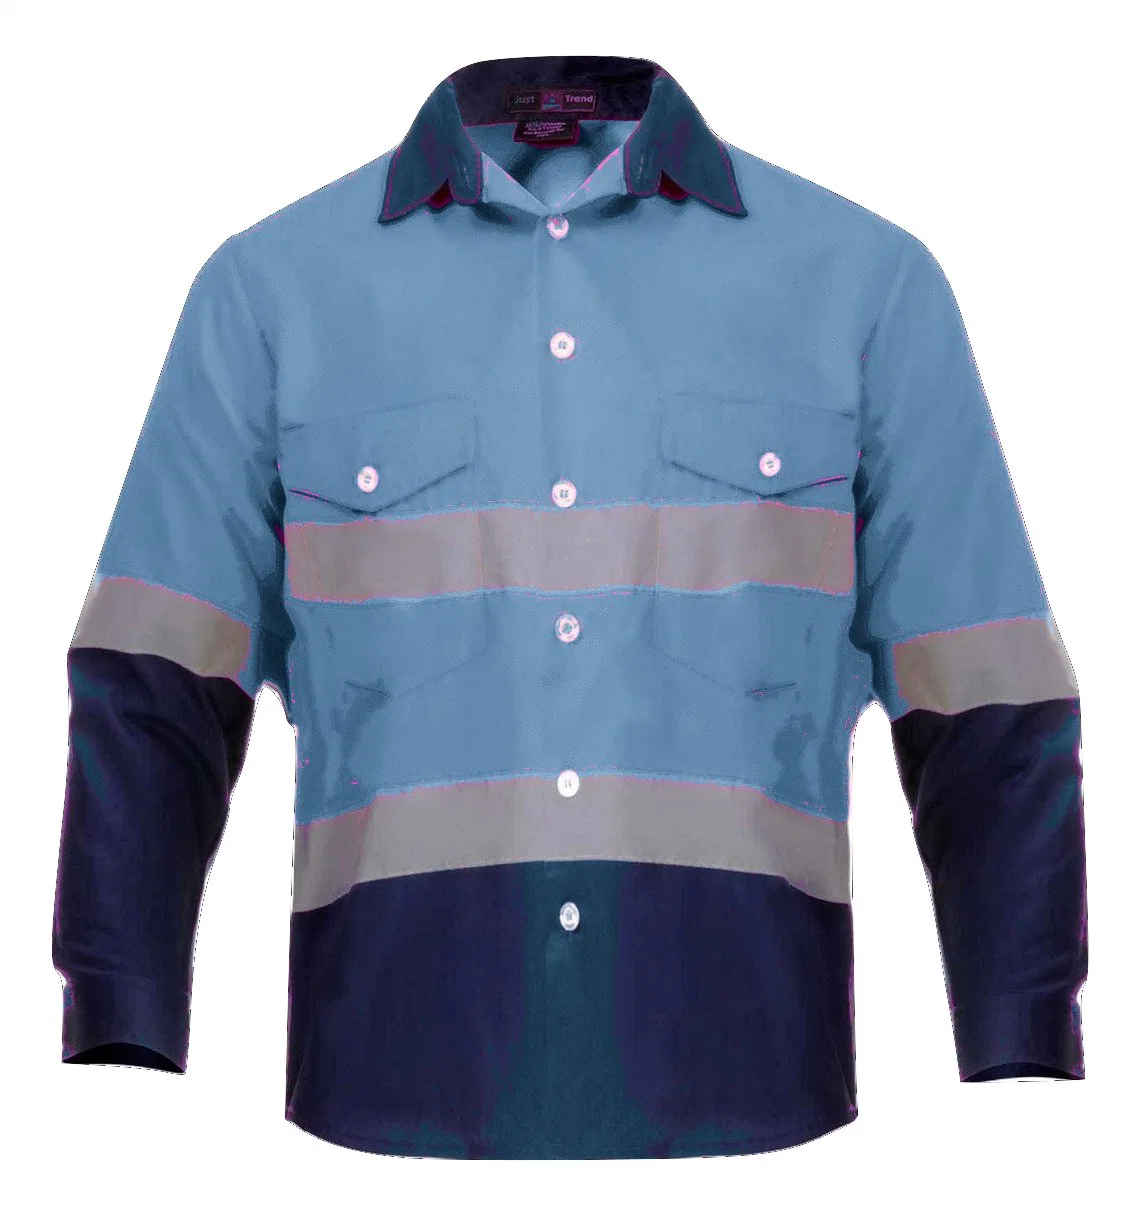 Wholesale Custom Made High Visibility Hi Vis Reflective Safety Work Shirt Workwear Short Sleeves- Light Weight